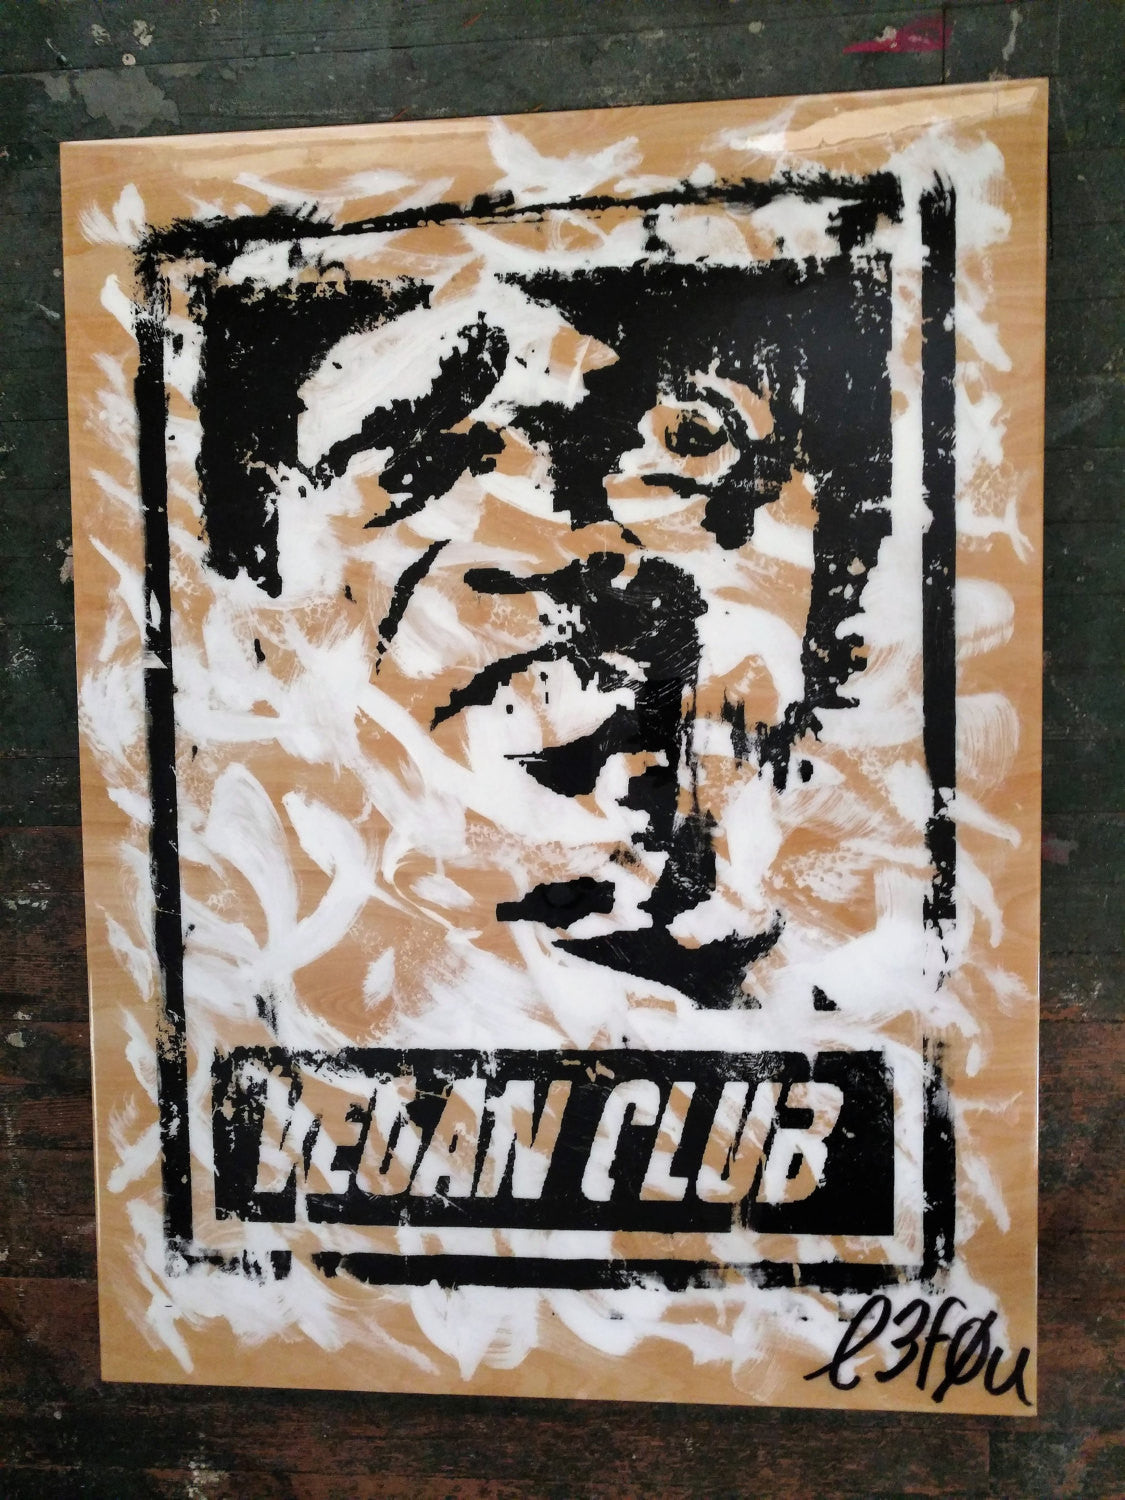 30x40 Original Artwork "Vegan Club" featuring your fav vegan celeb Samuel Jackson signed L3F0u (1 of X)